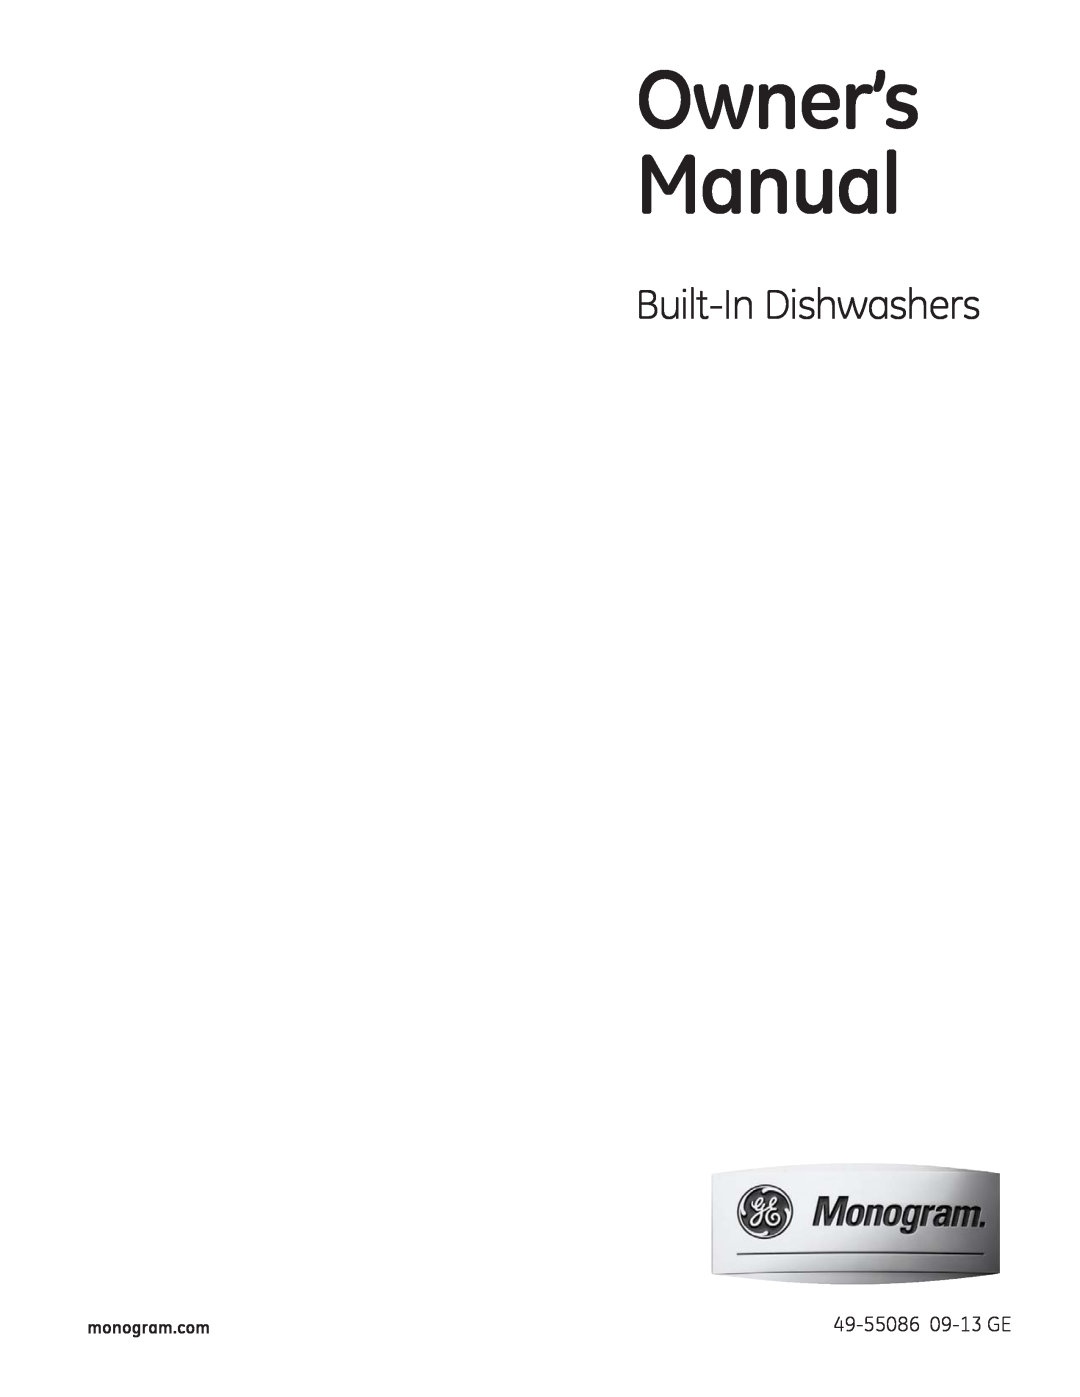 GE Monogram owner manual Built-In Dishwashers, Owner’s Manual, 49-55086 09-13 GE, monogram.com 